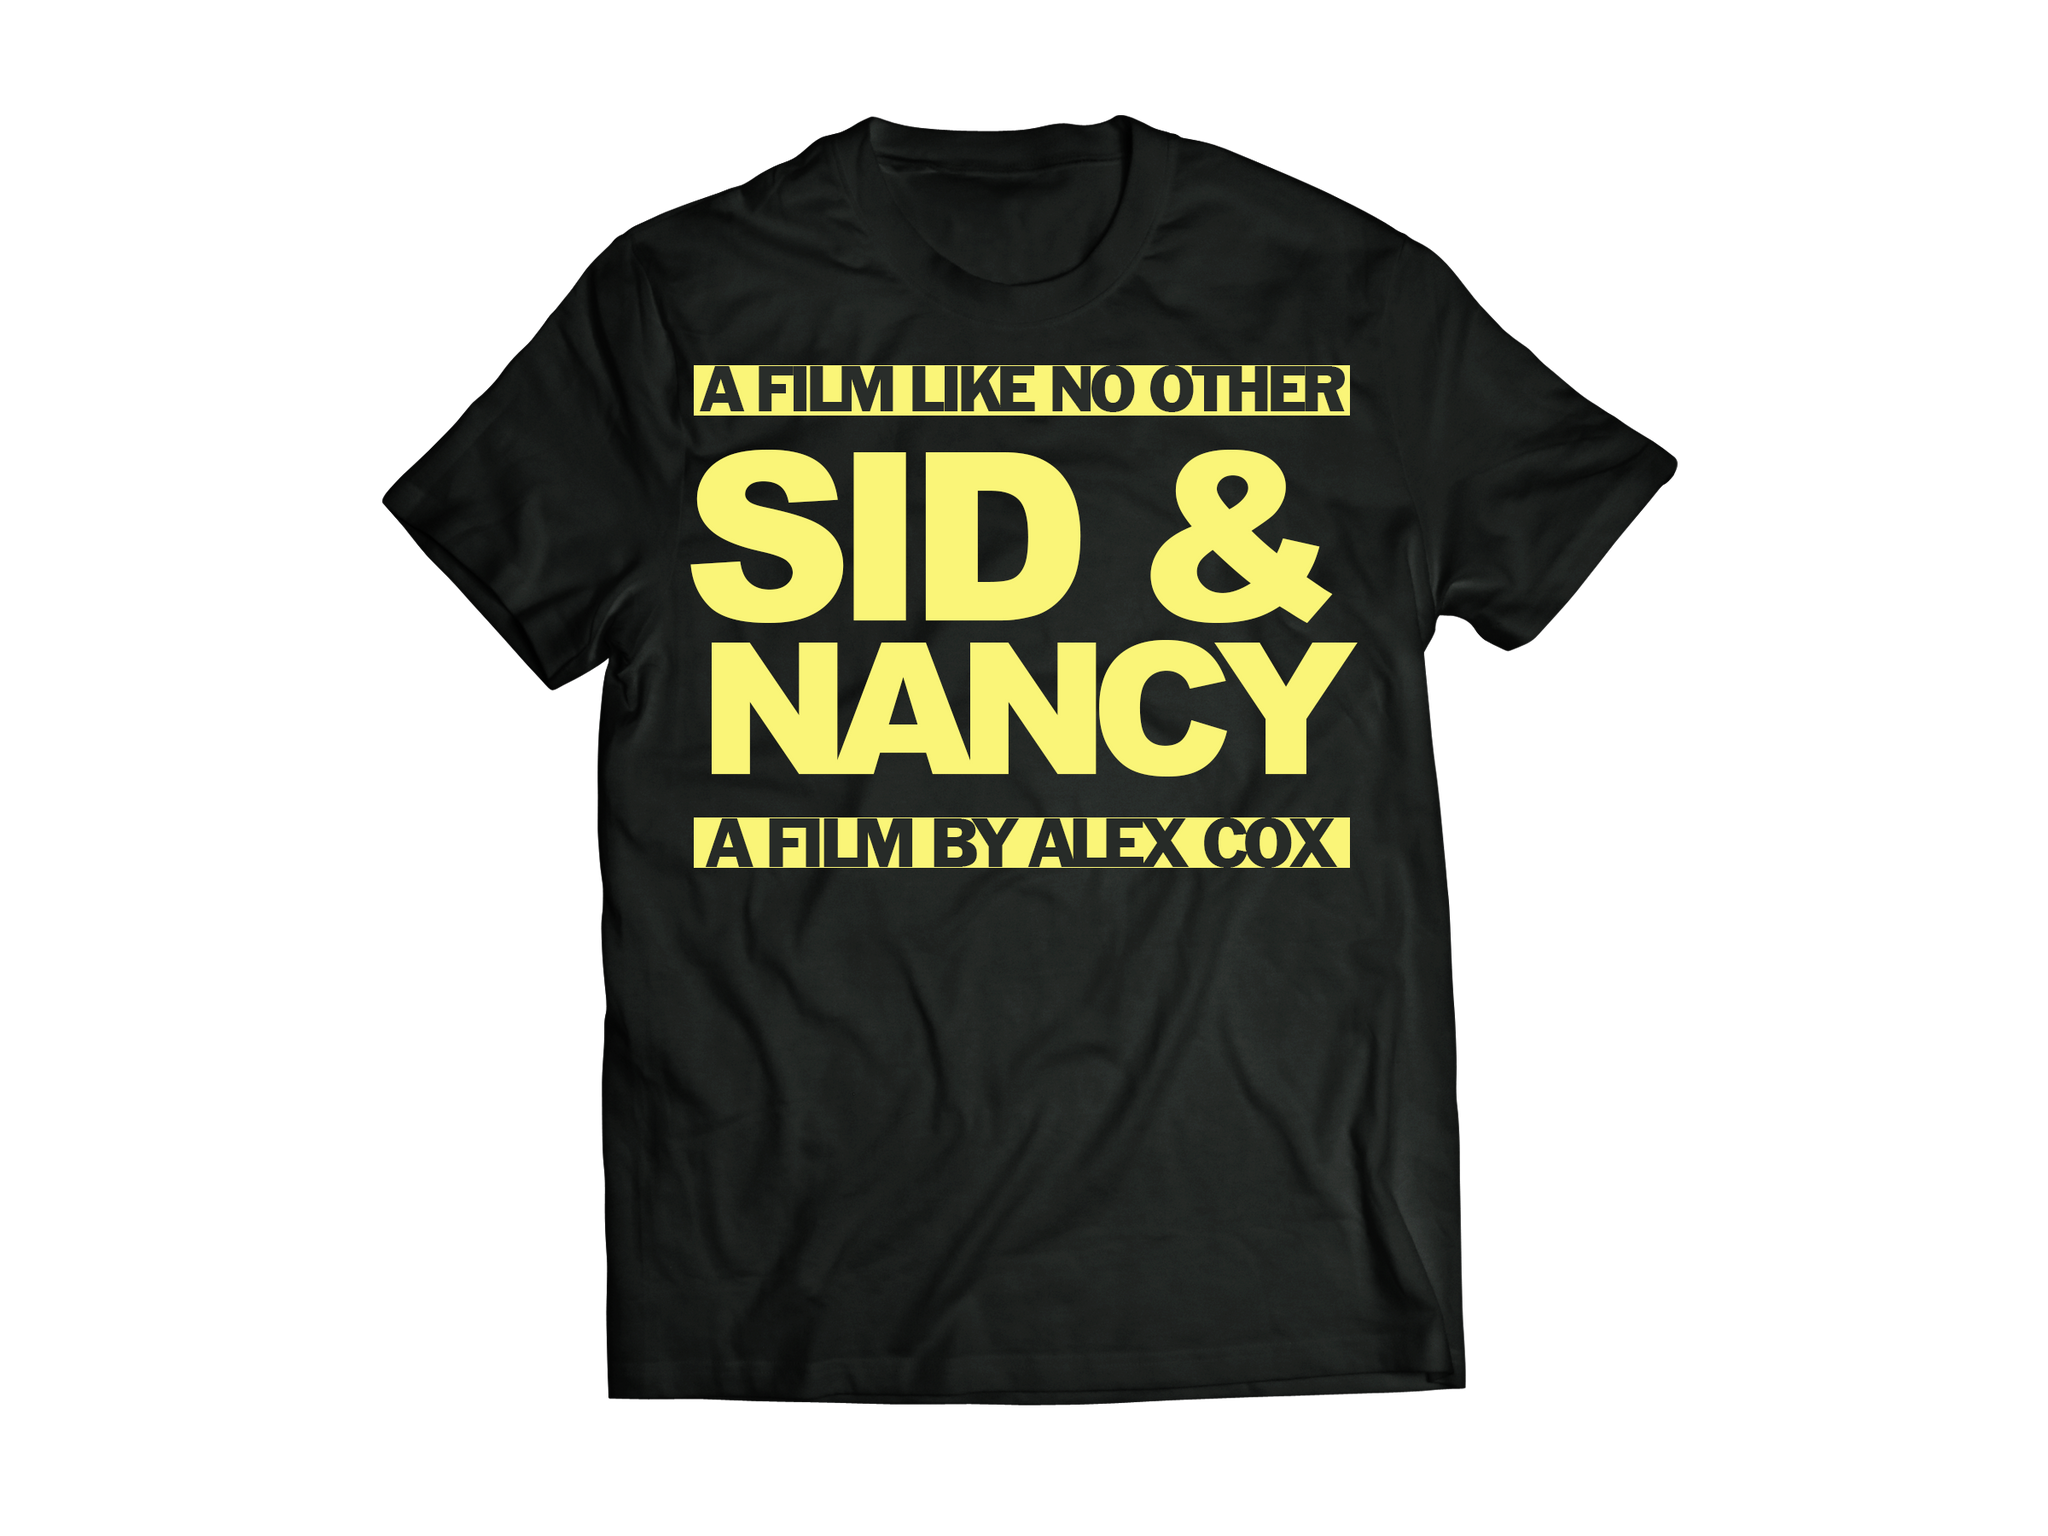 SID & NANCY - "A FILM LIKE NO OTHER" T-SHIRT